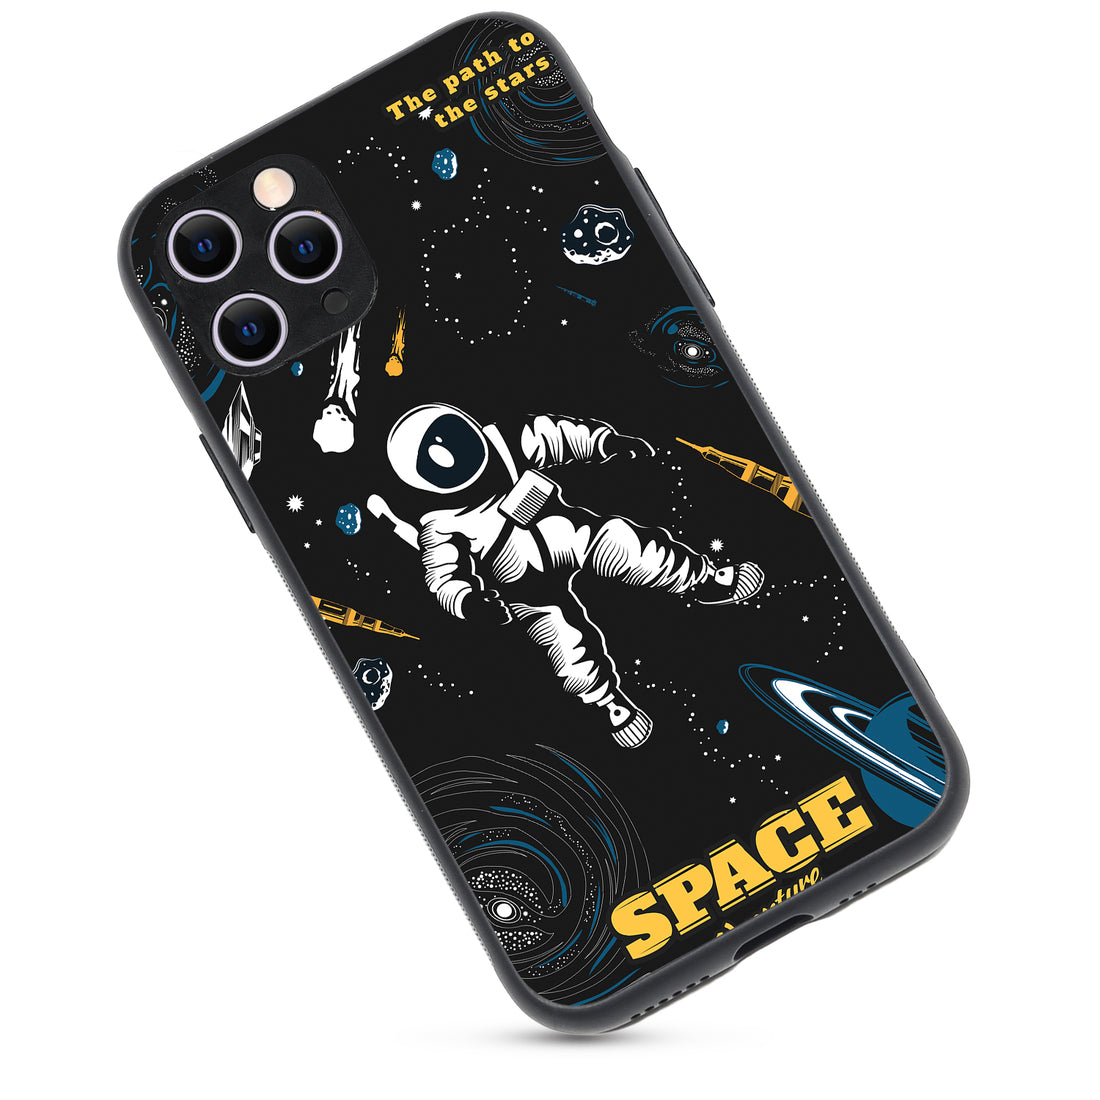 Astronaut Travel iPhone 11 Pro Case